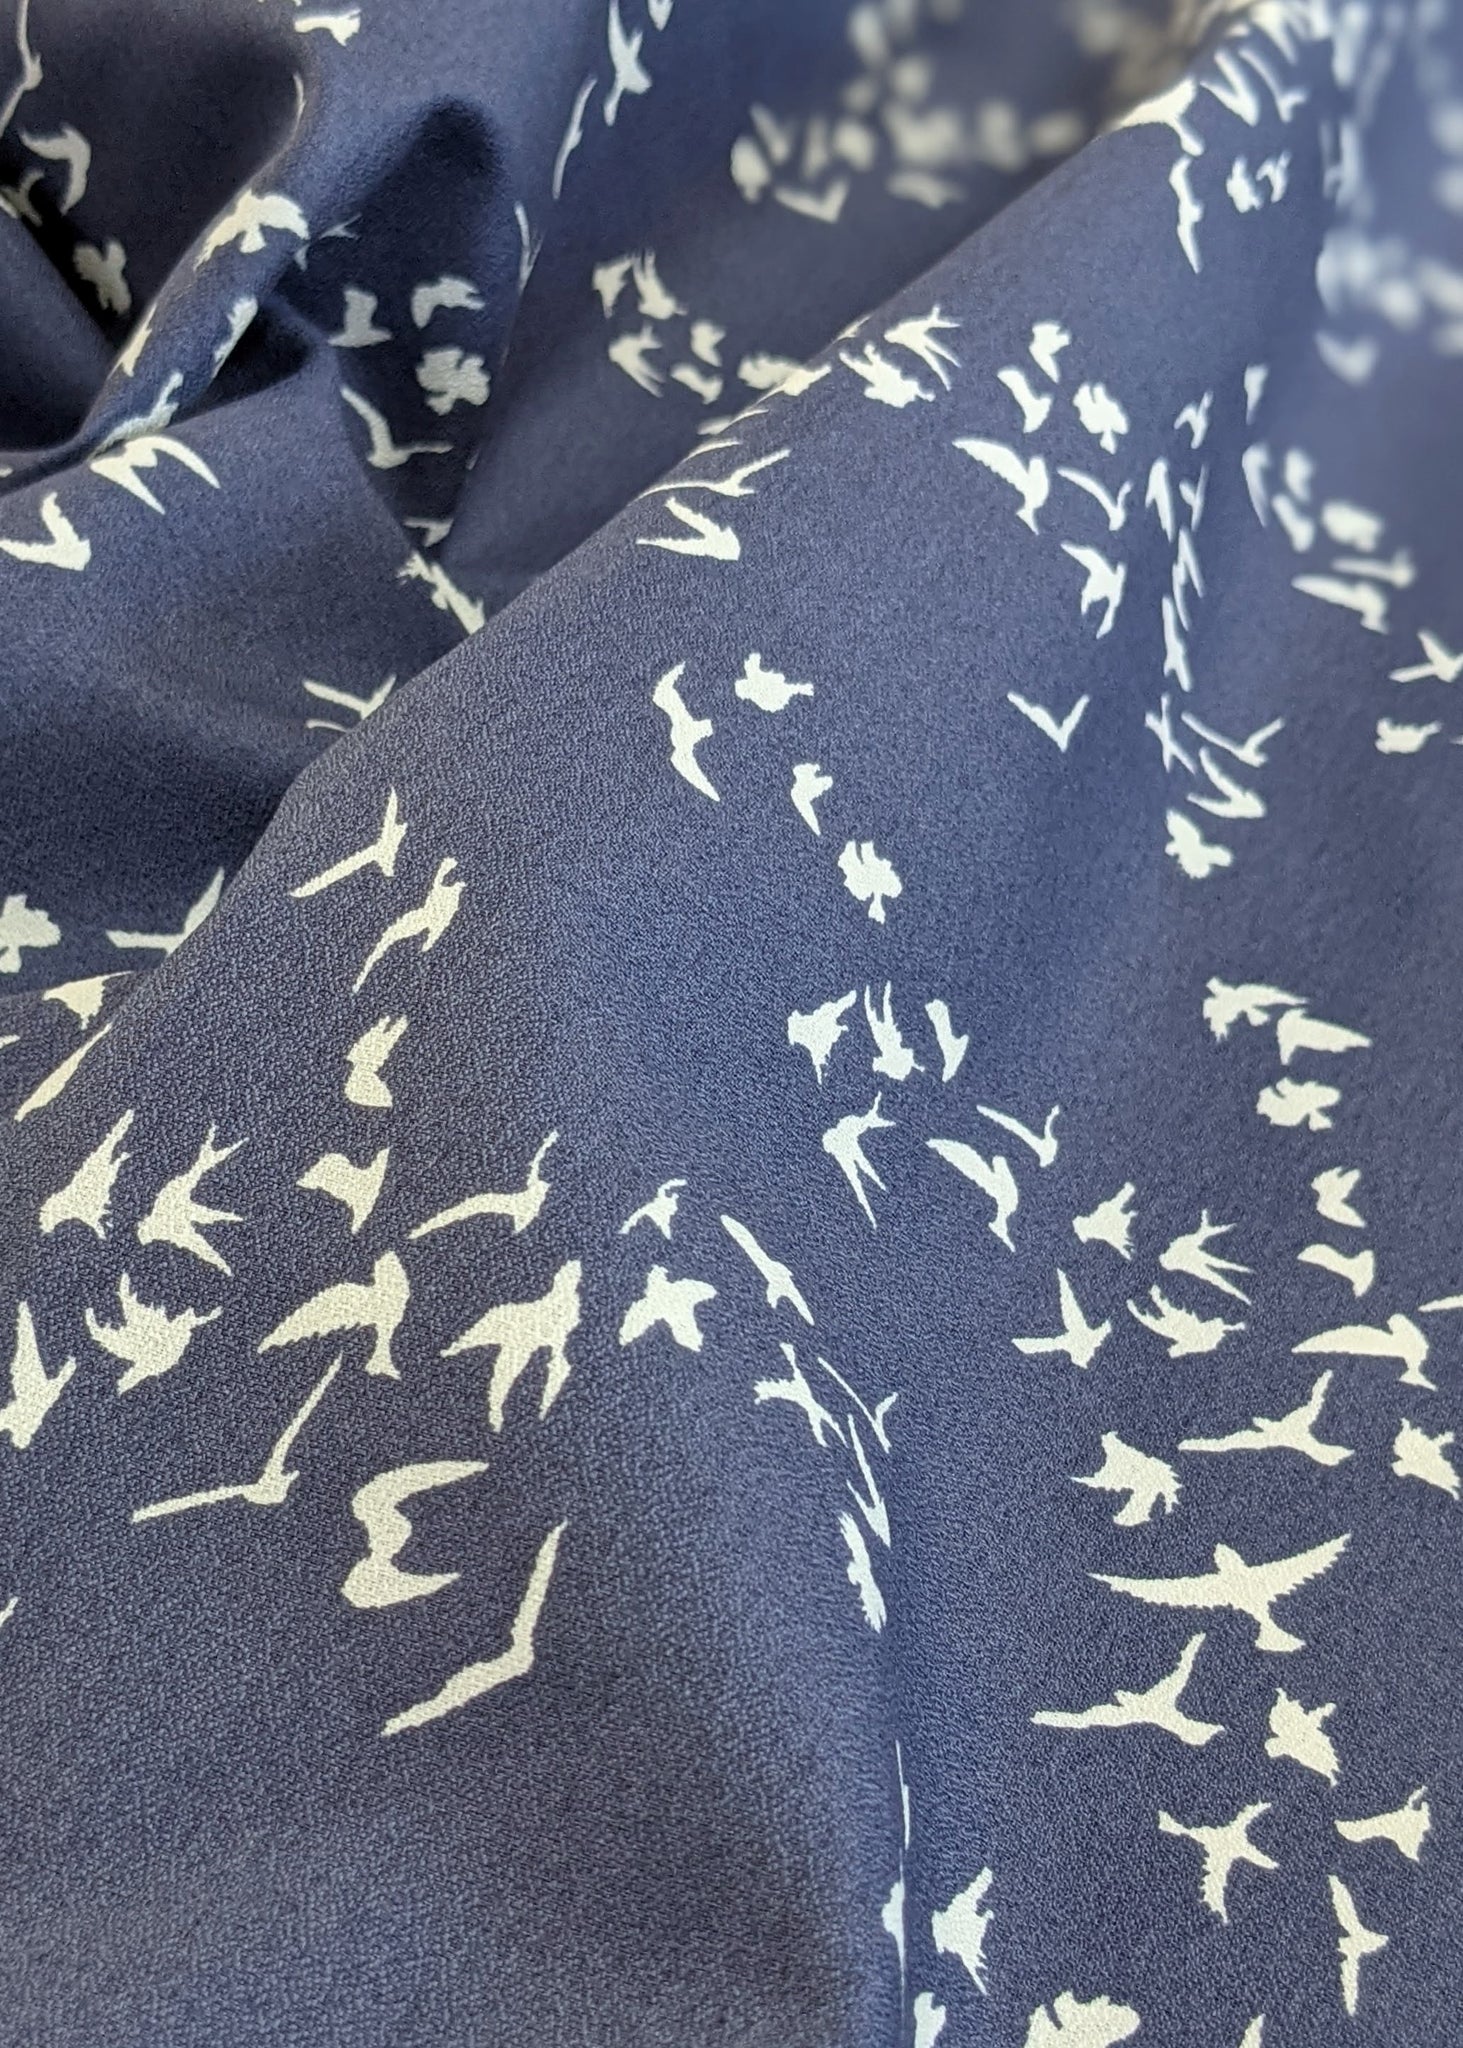 Bird Print Fabric by the Yard